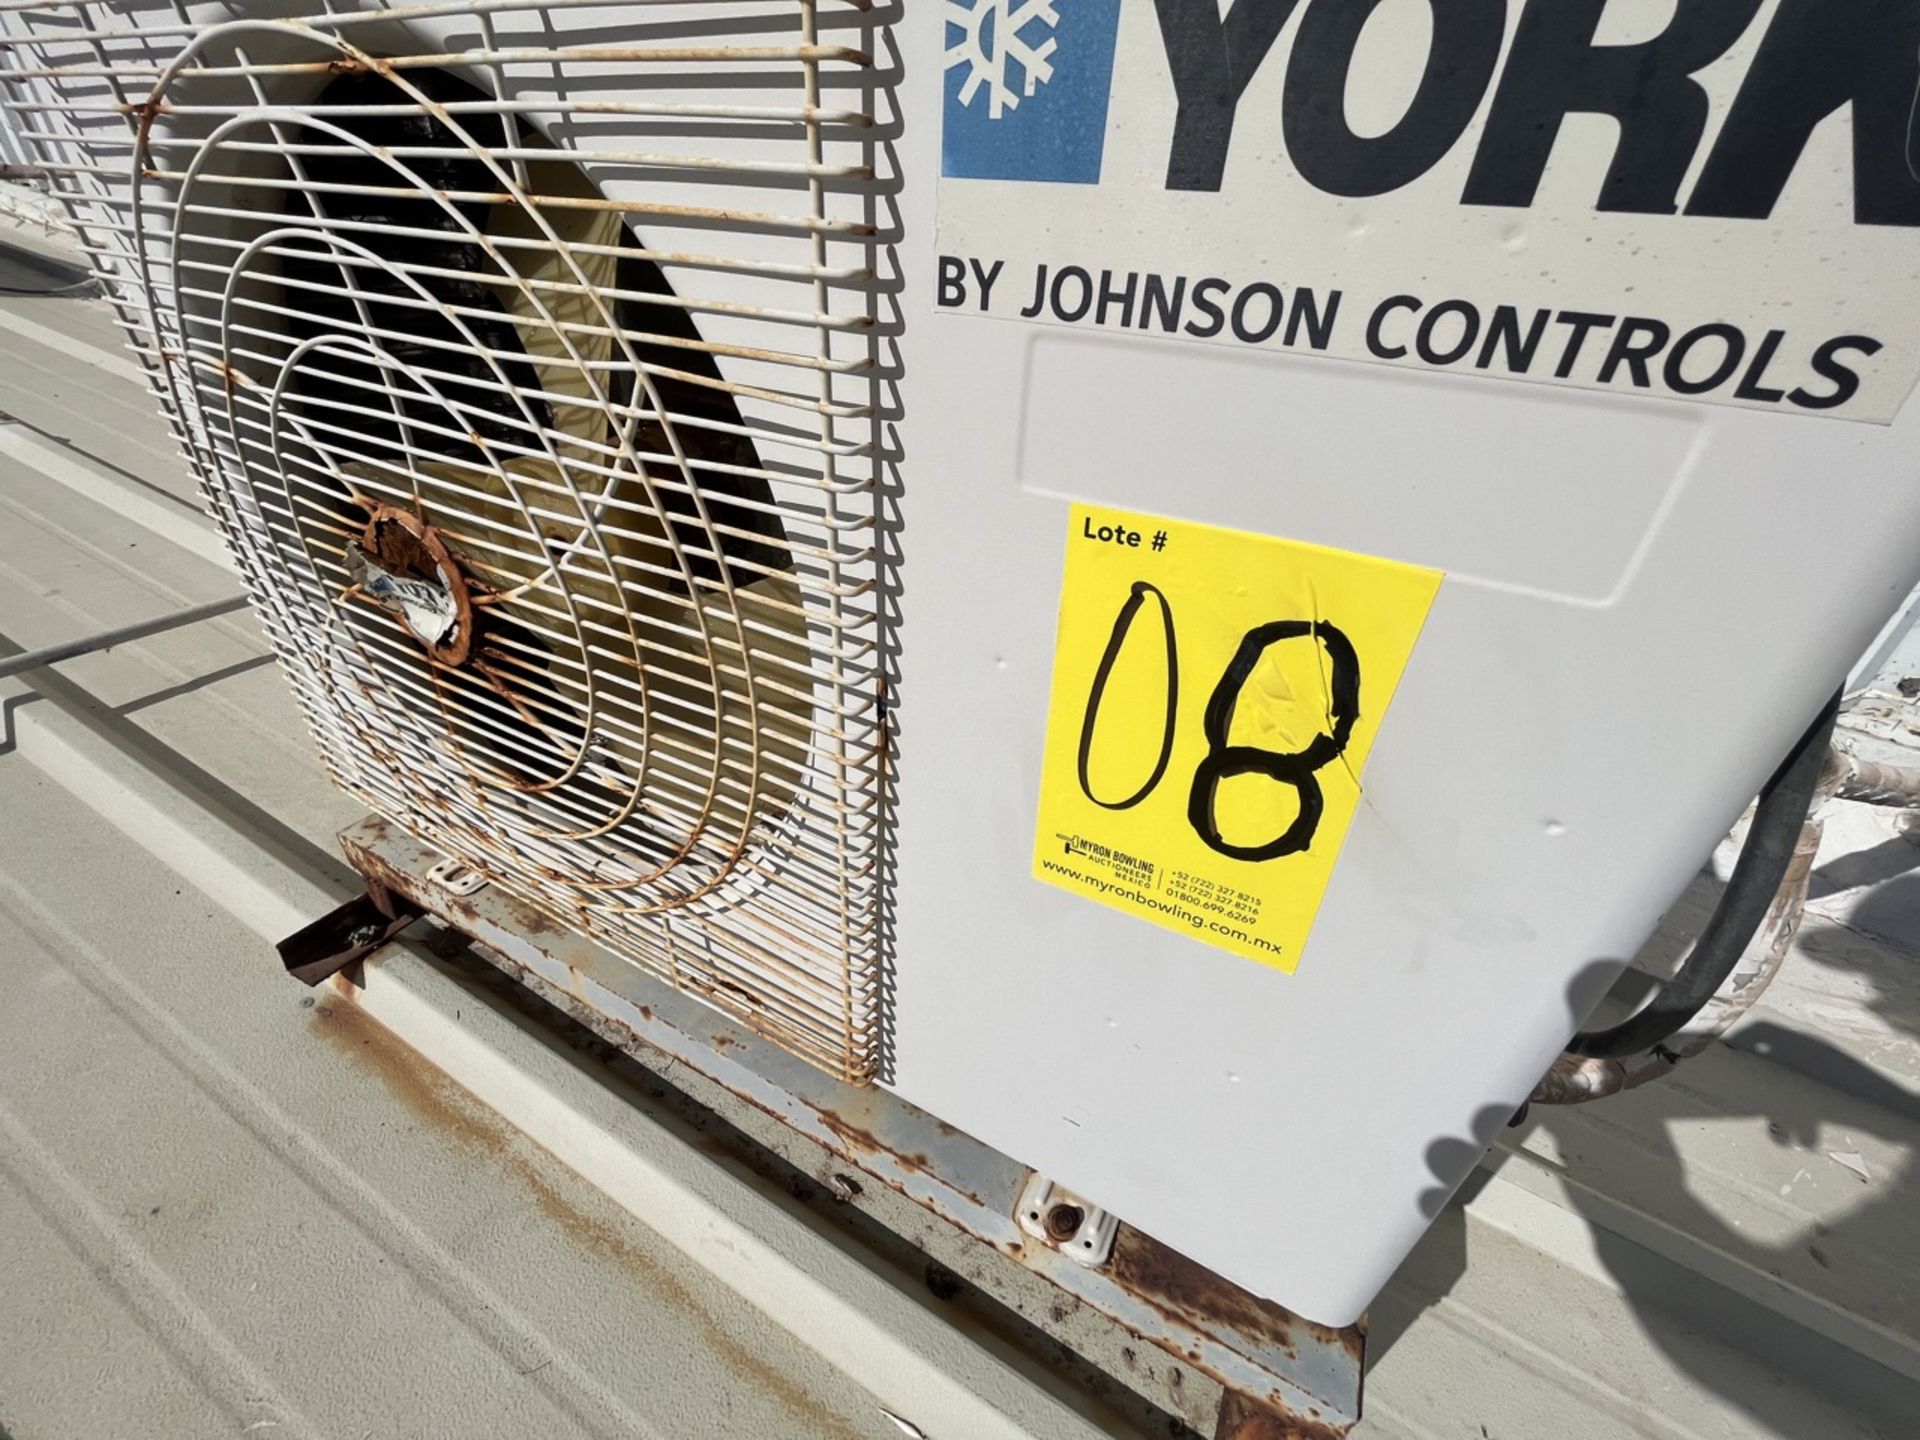 York minisplit air conditioner with control, Model YSEA12FS-ADK, Series 100001010140290131, 220 Vol - Image 13 of 14